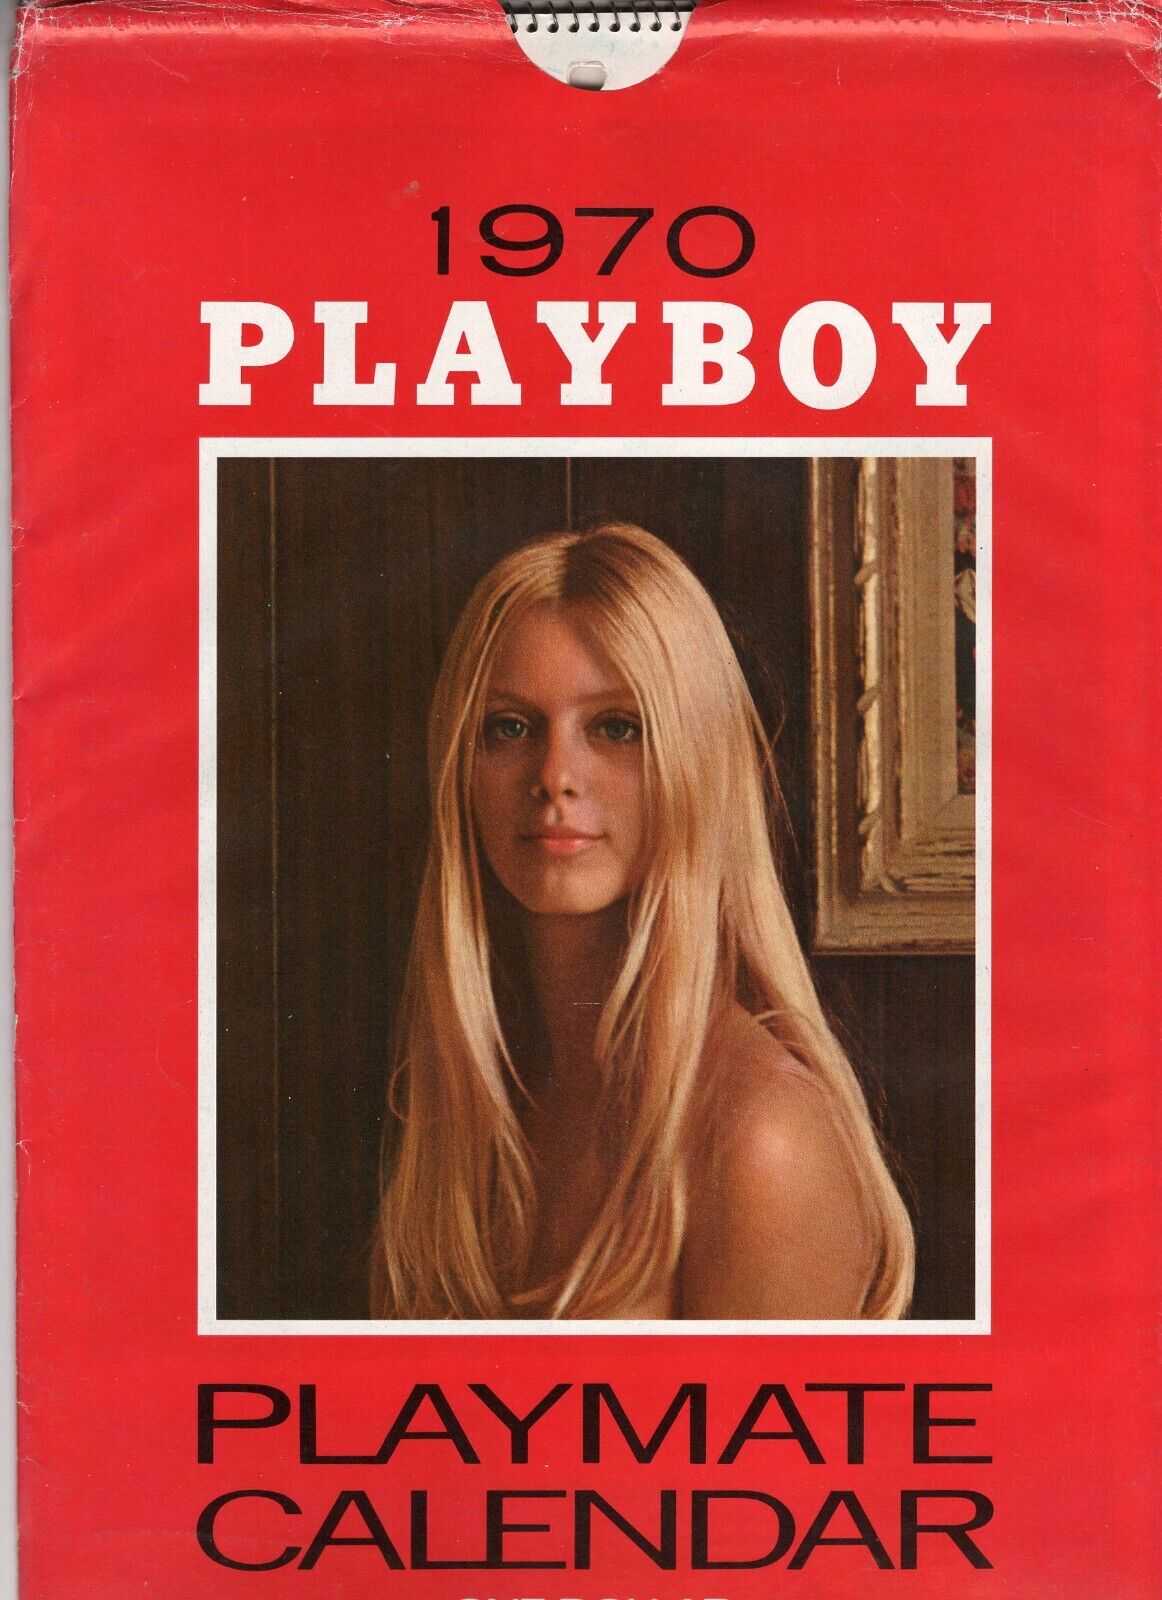 1970 to 1979 Playboy wall calendars